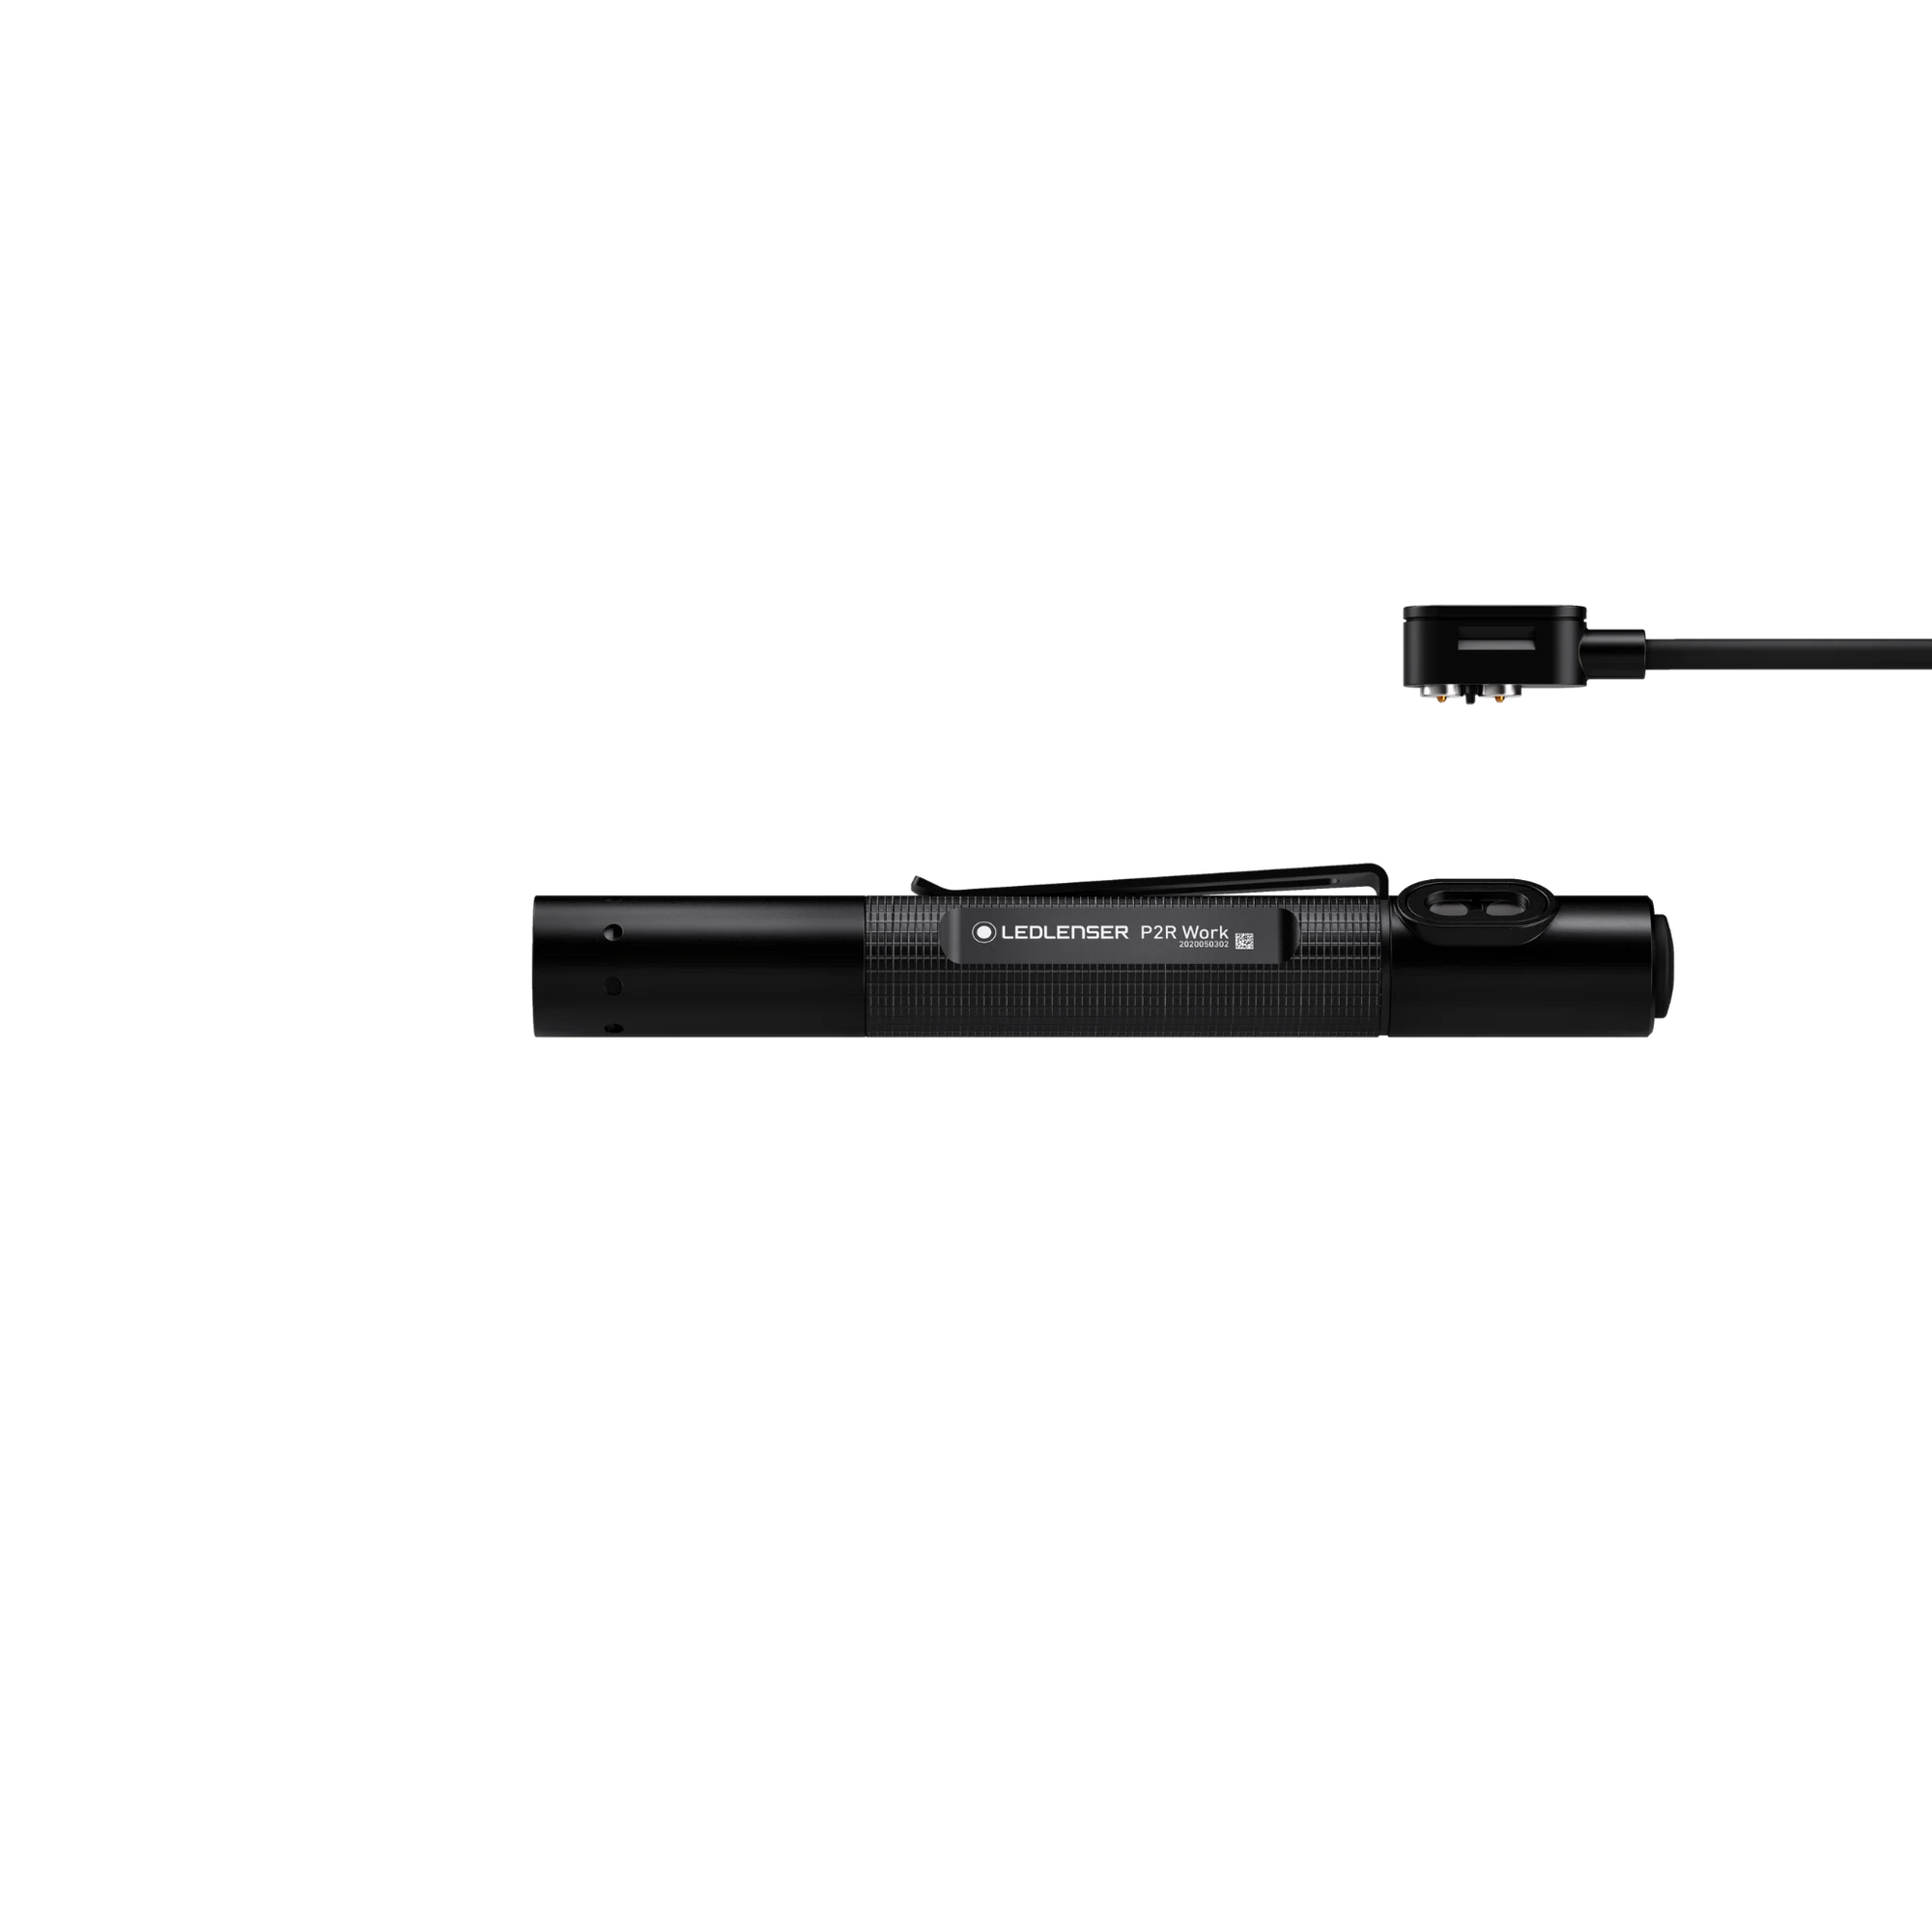 Ledlenser P2R Work Compact Rechargeable Light Tactical Gear Australia Supplier Distributor Dealer